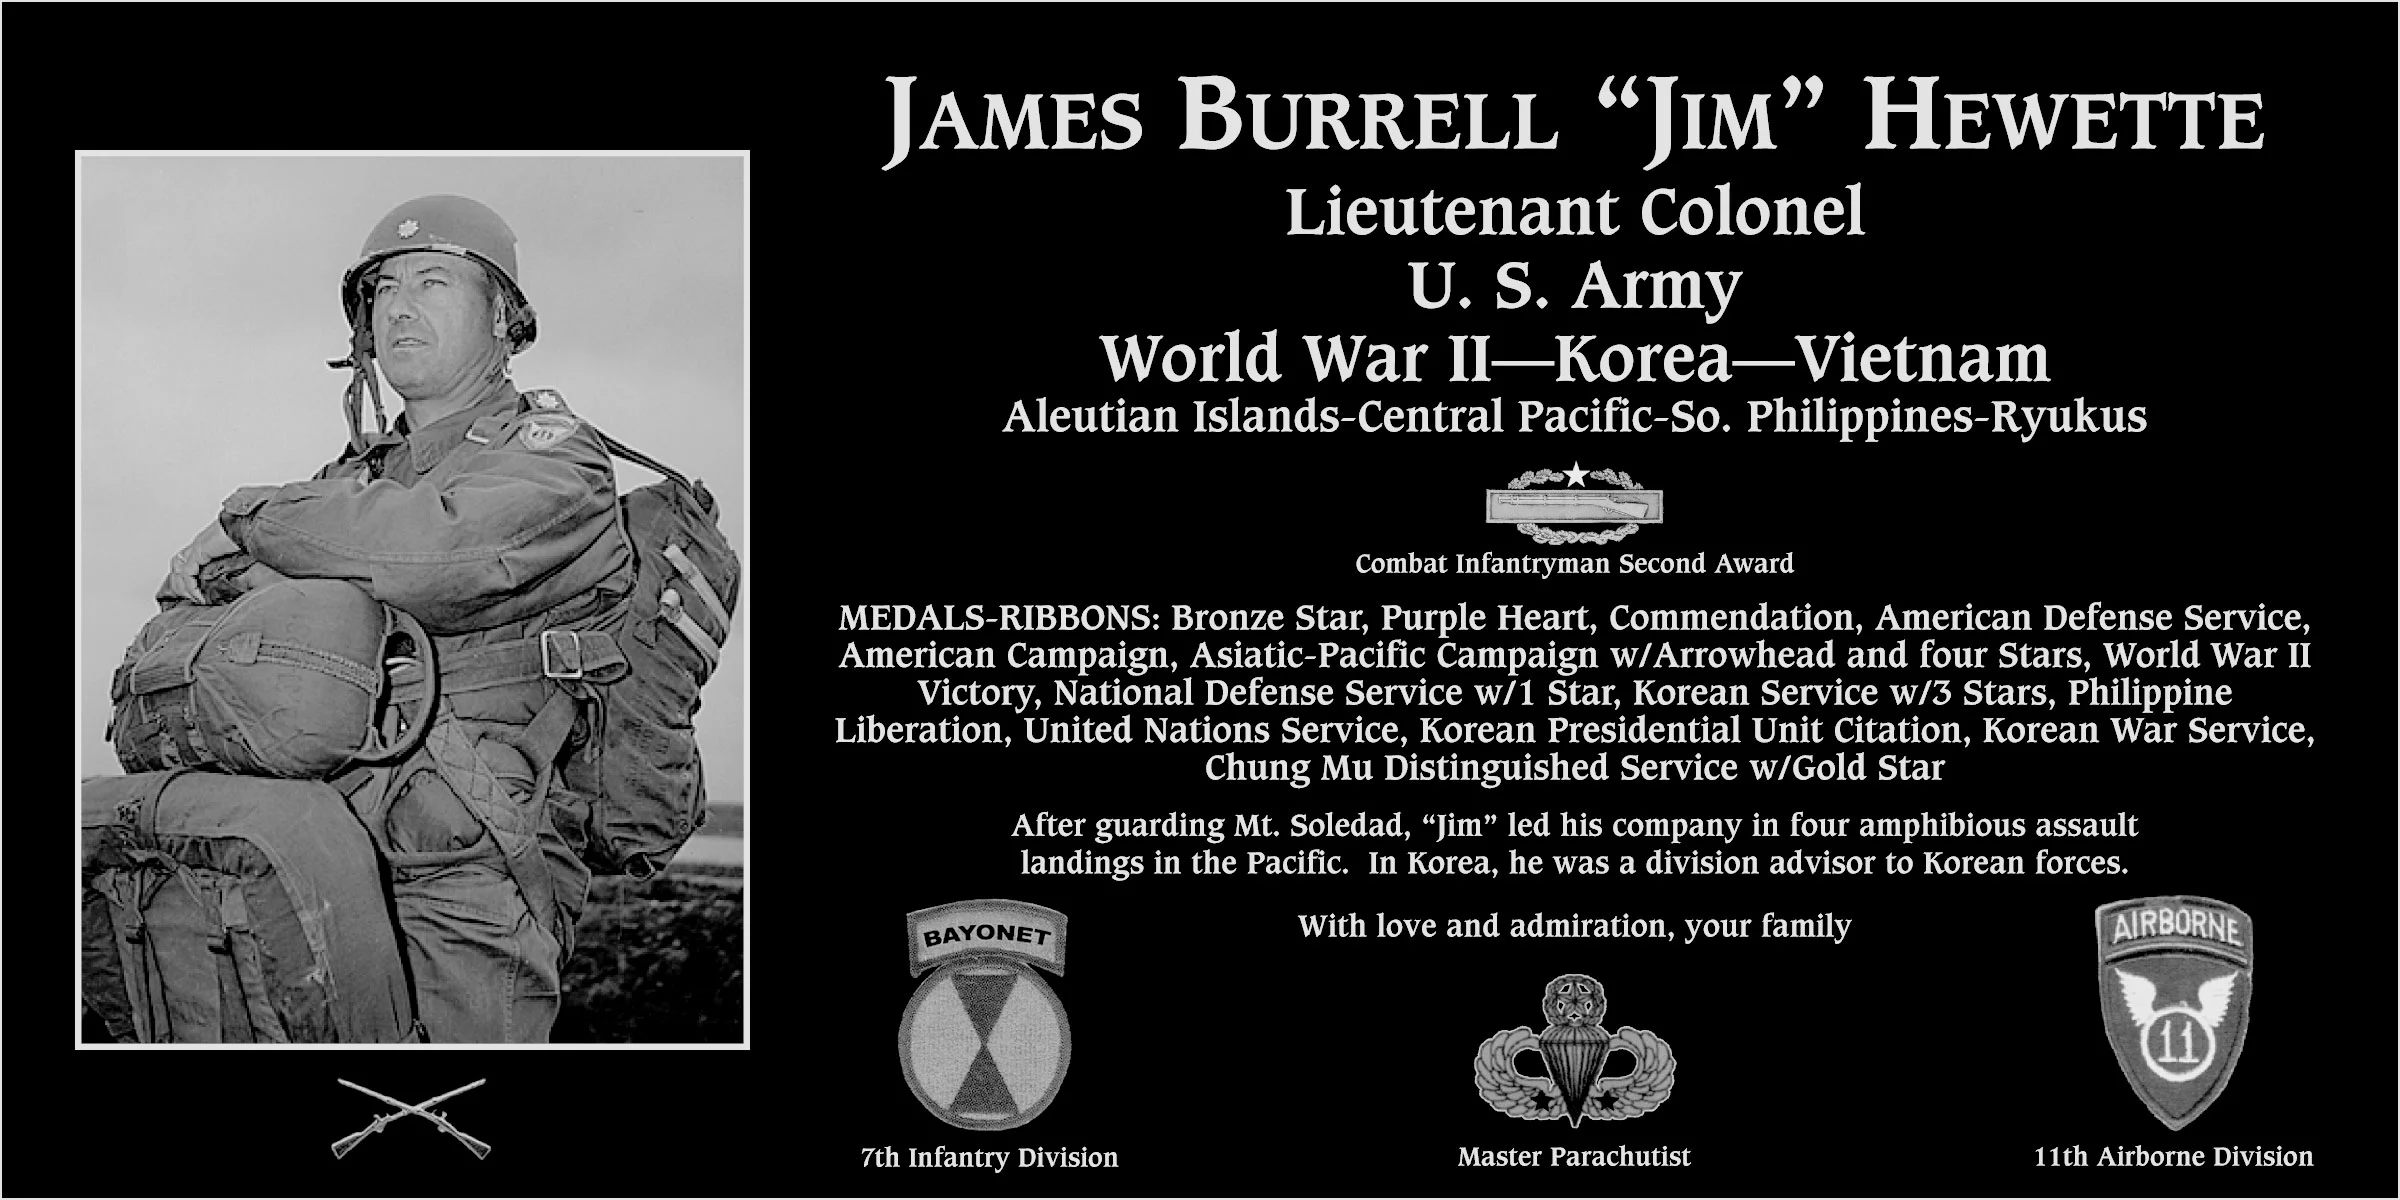 James Burrell “Jim” Hewette